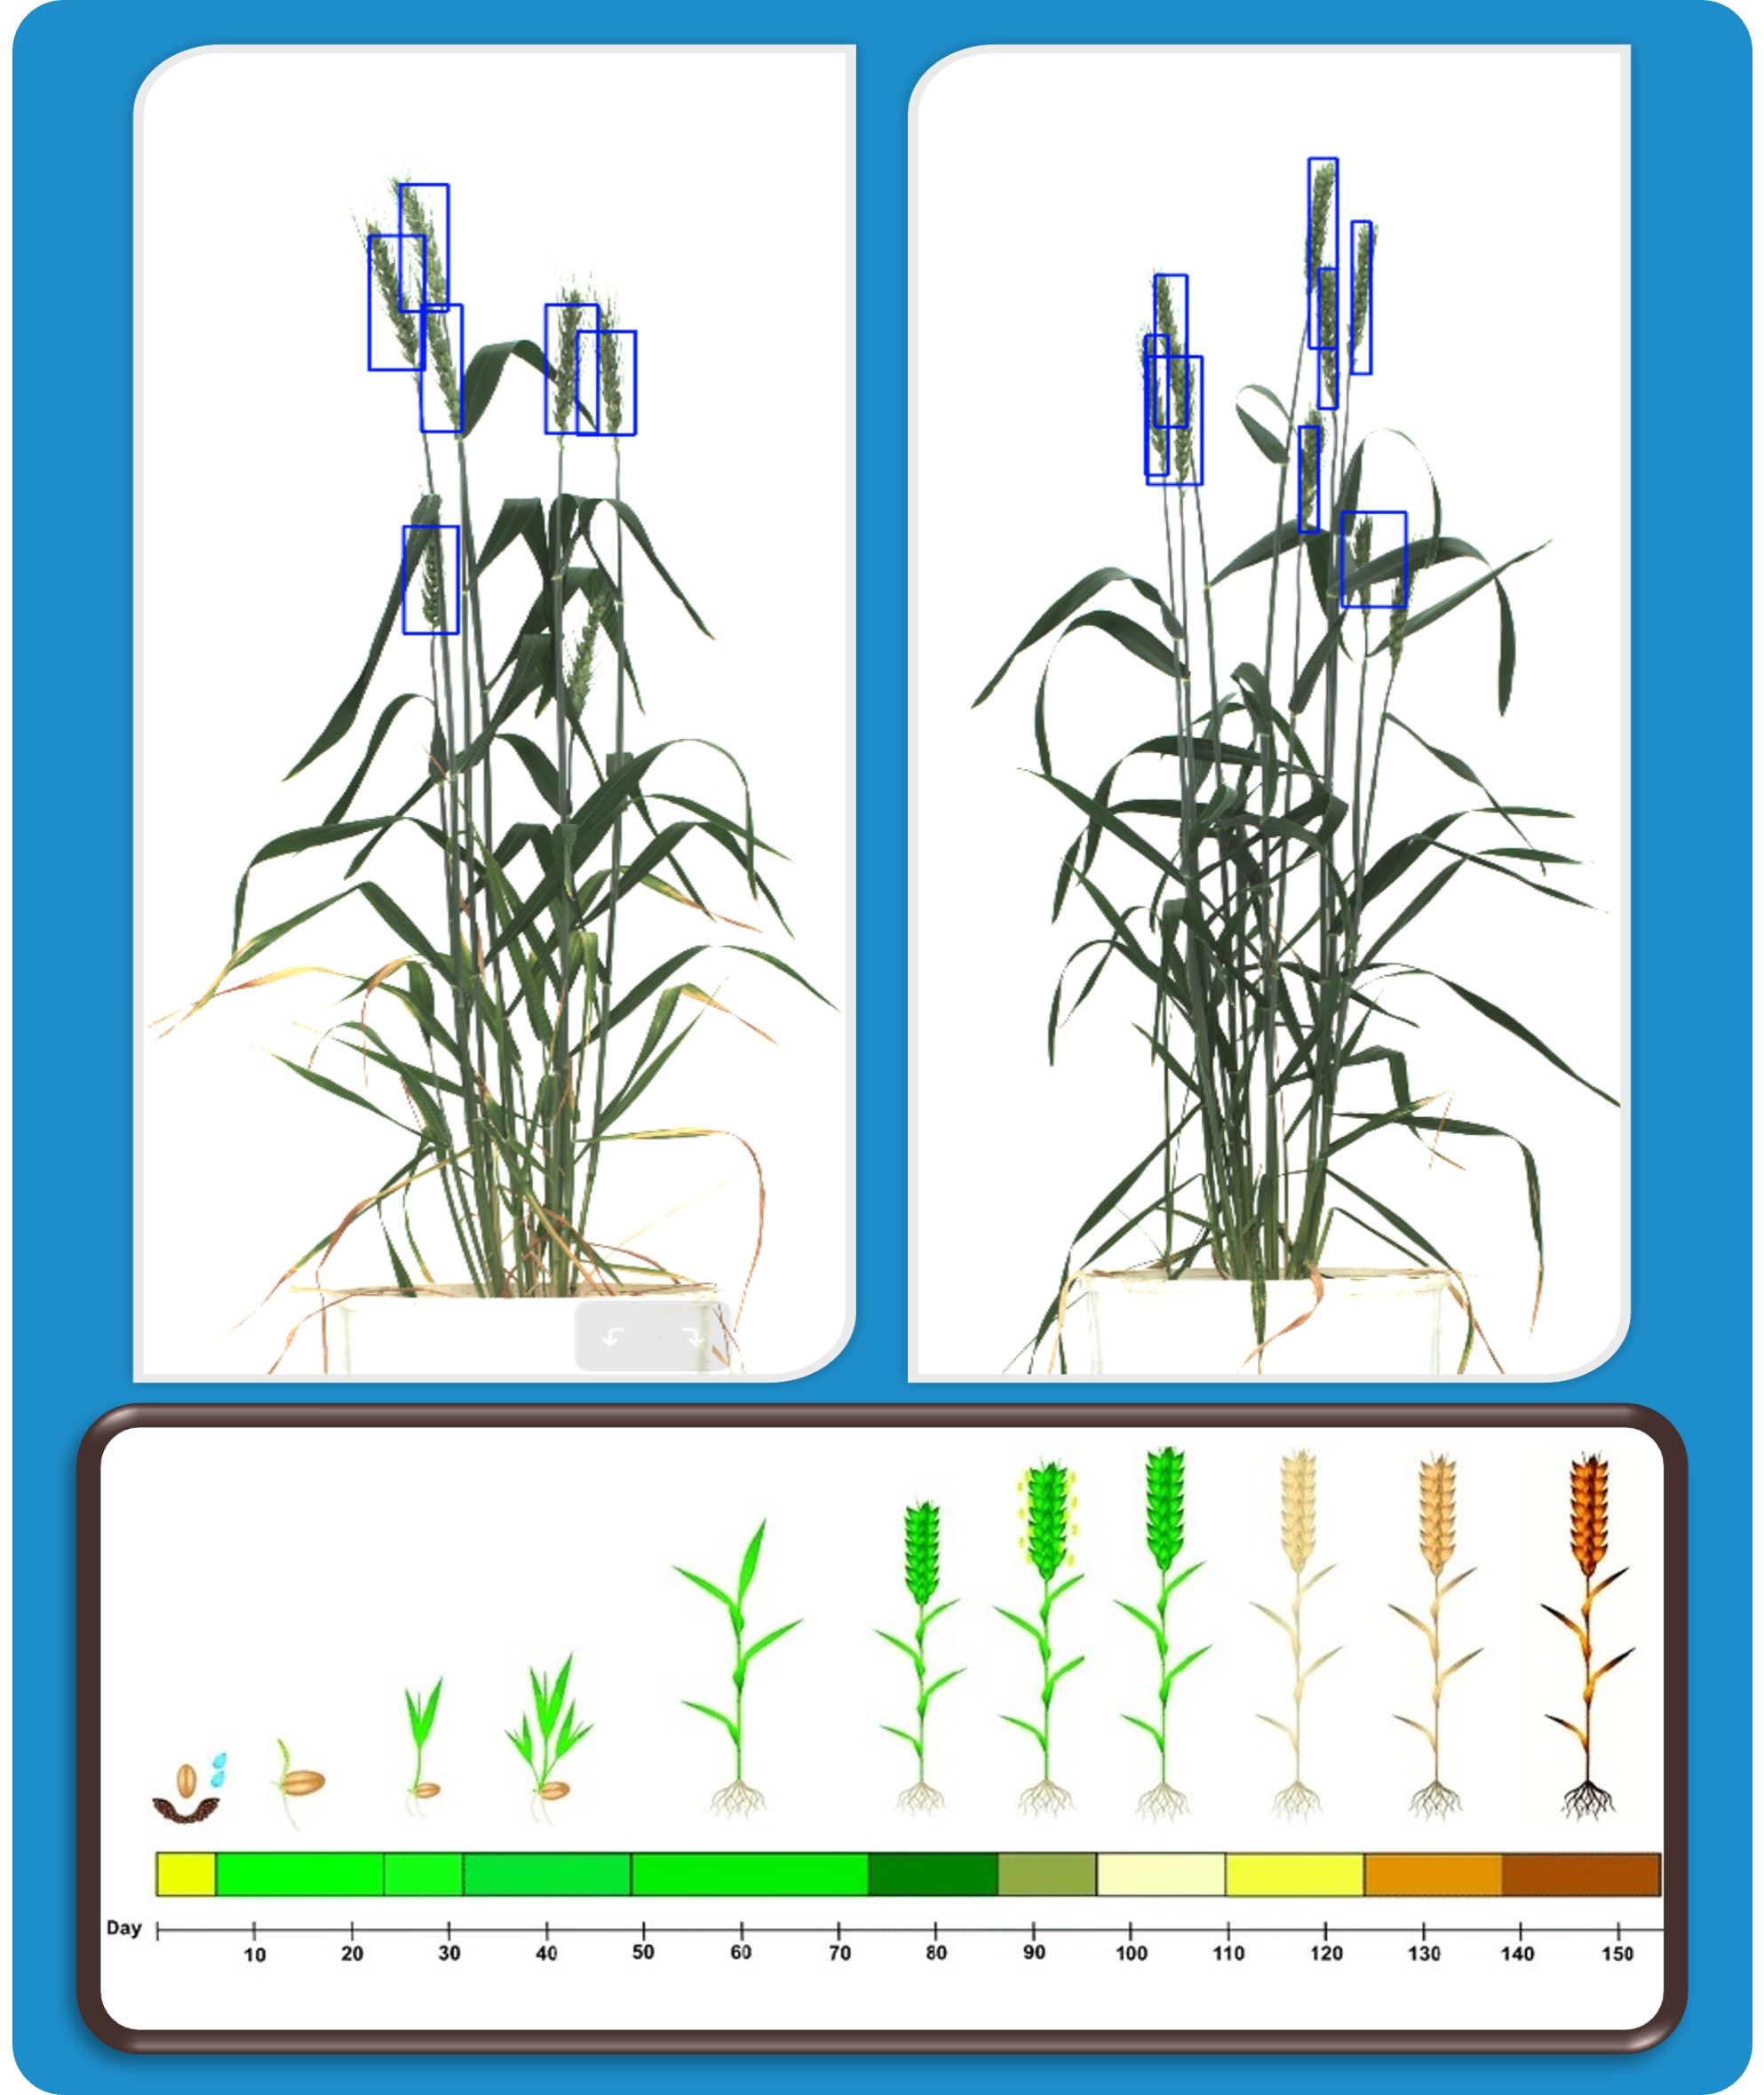 Wheat Plant Phenotyping